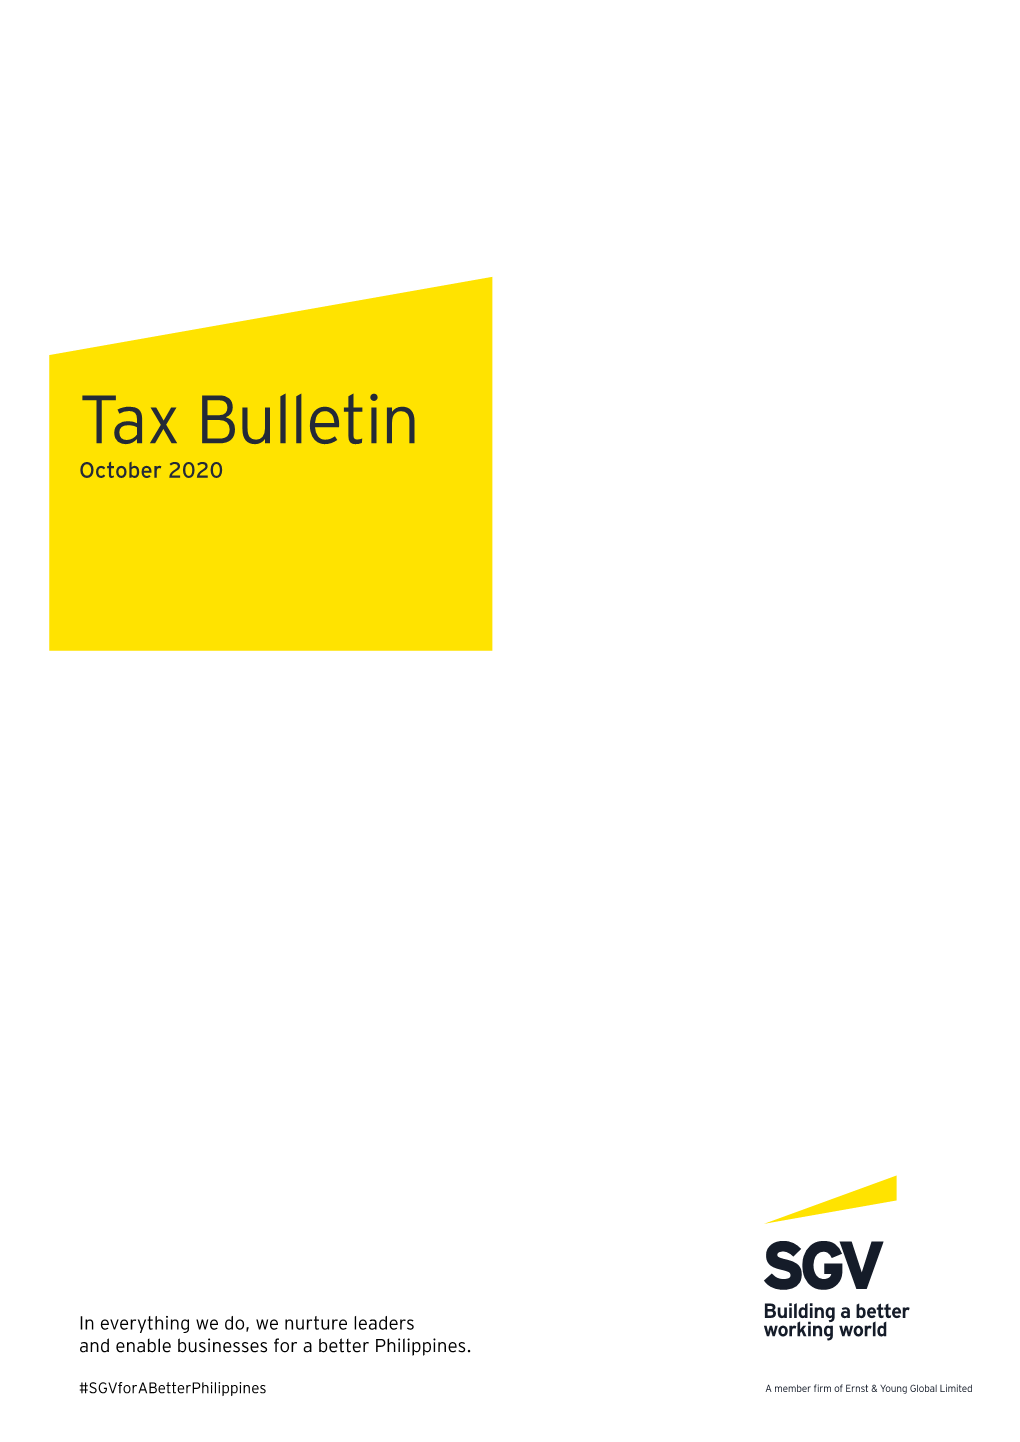 Tax Bulletin October 2020